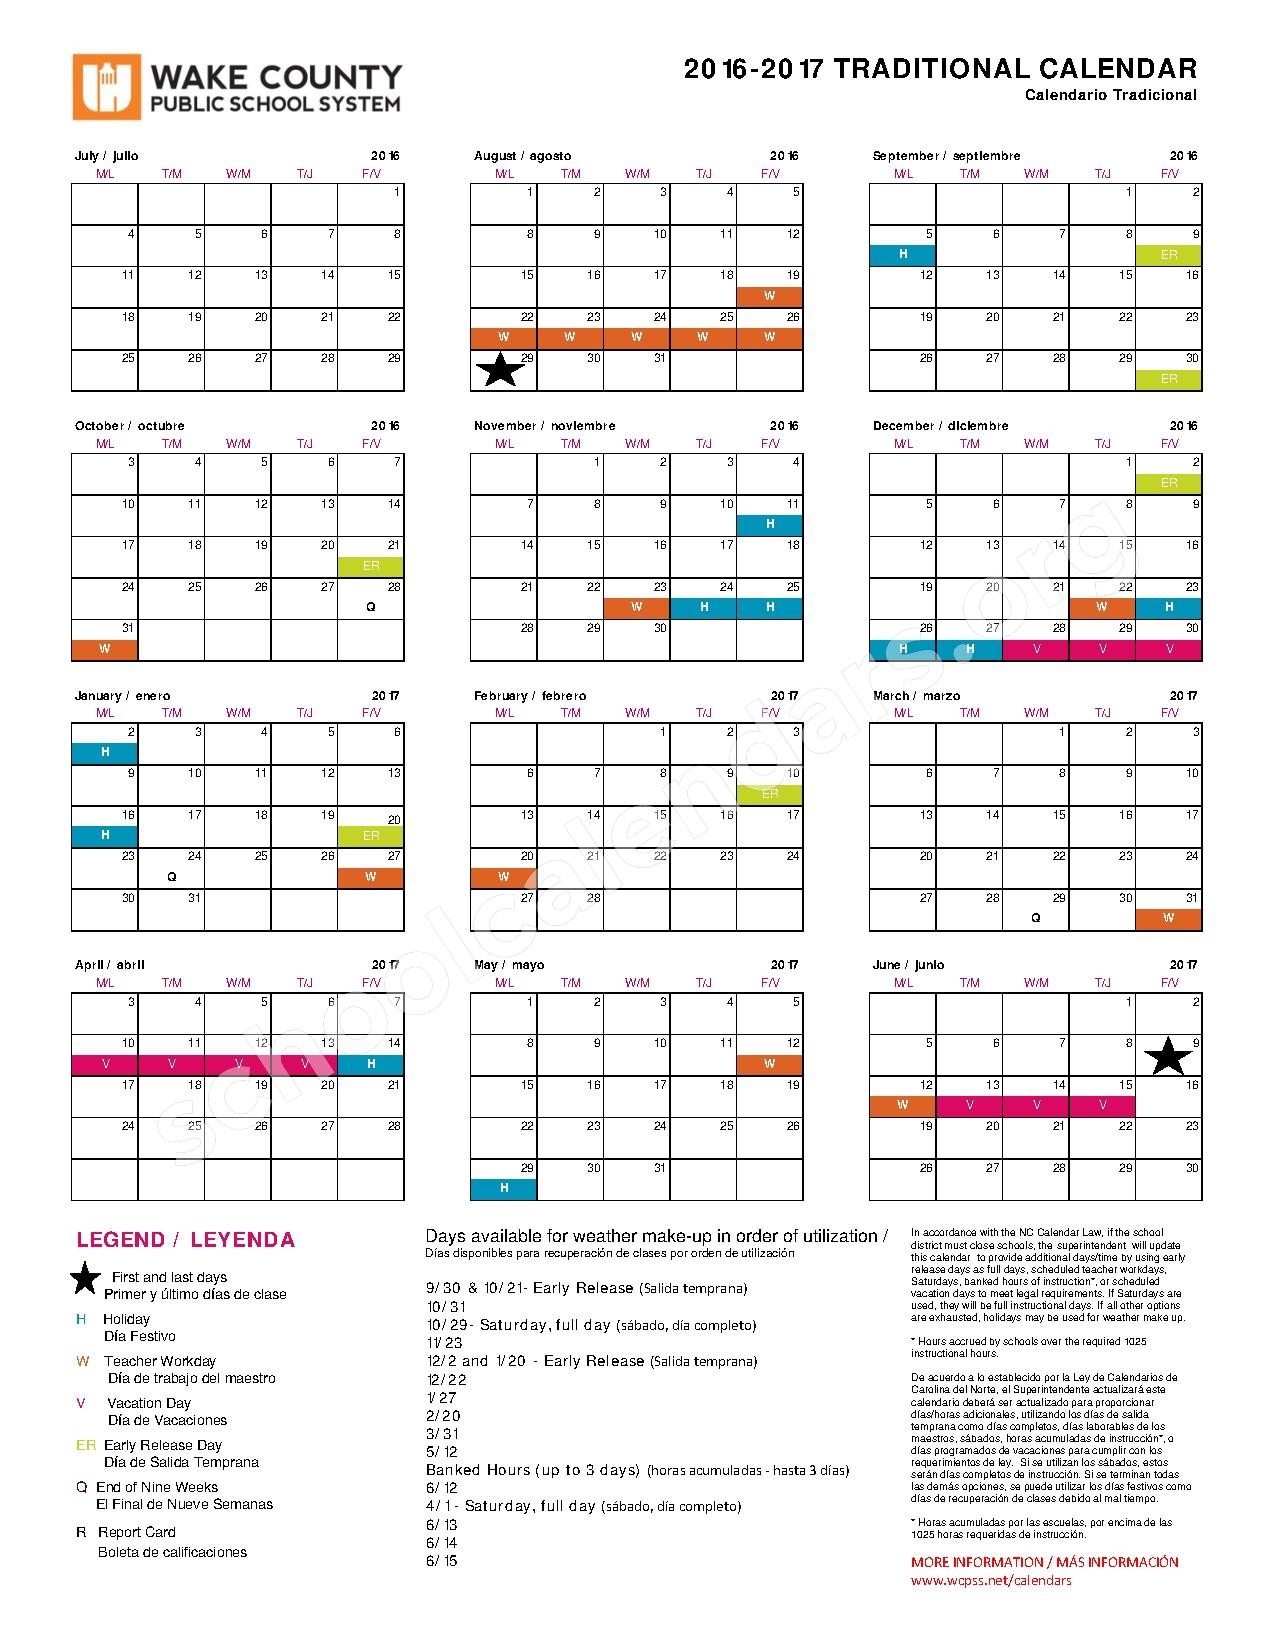 Wake County Public Schools Calendar